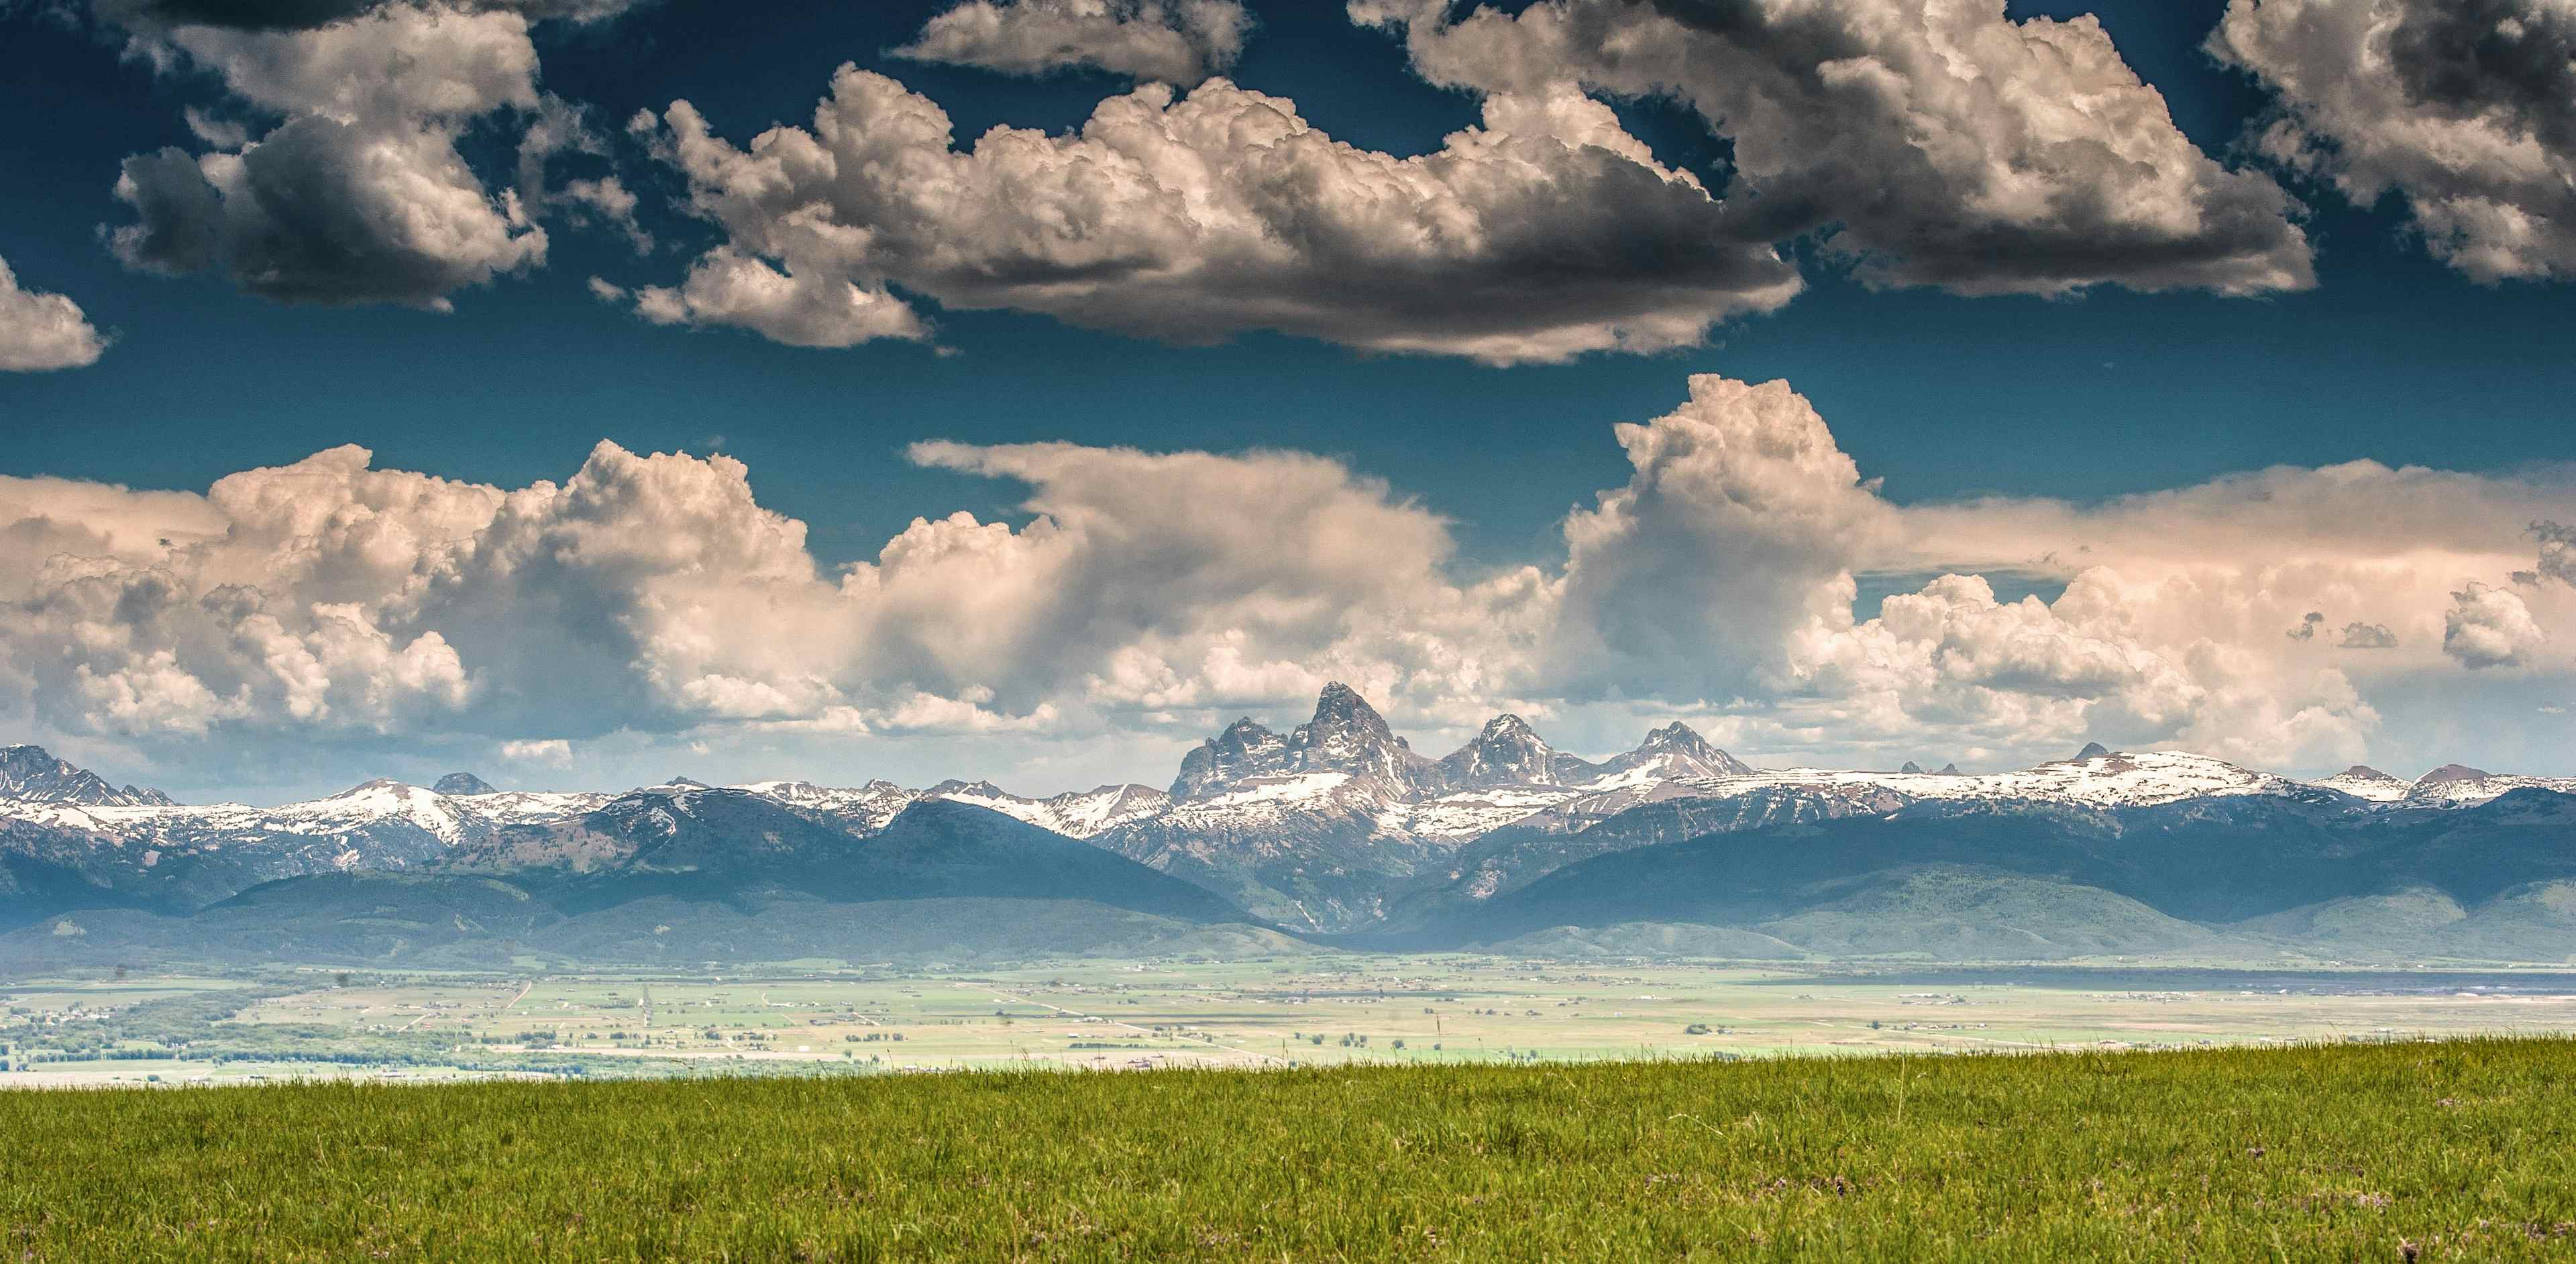 The Teton Mountain Range overlooking Teton Valley in Eastern Idaho, a part of the Yellowstone Teton Territory.